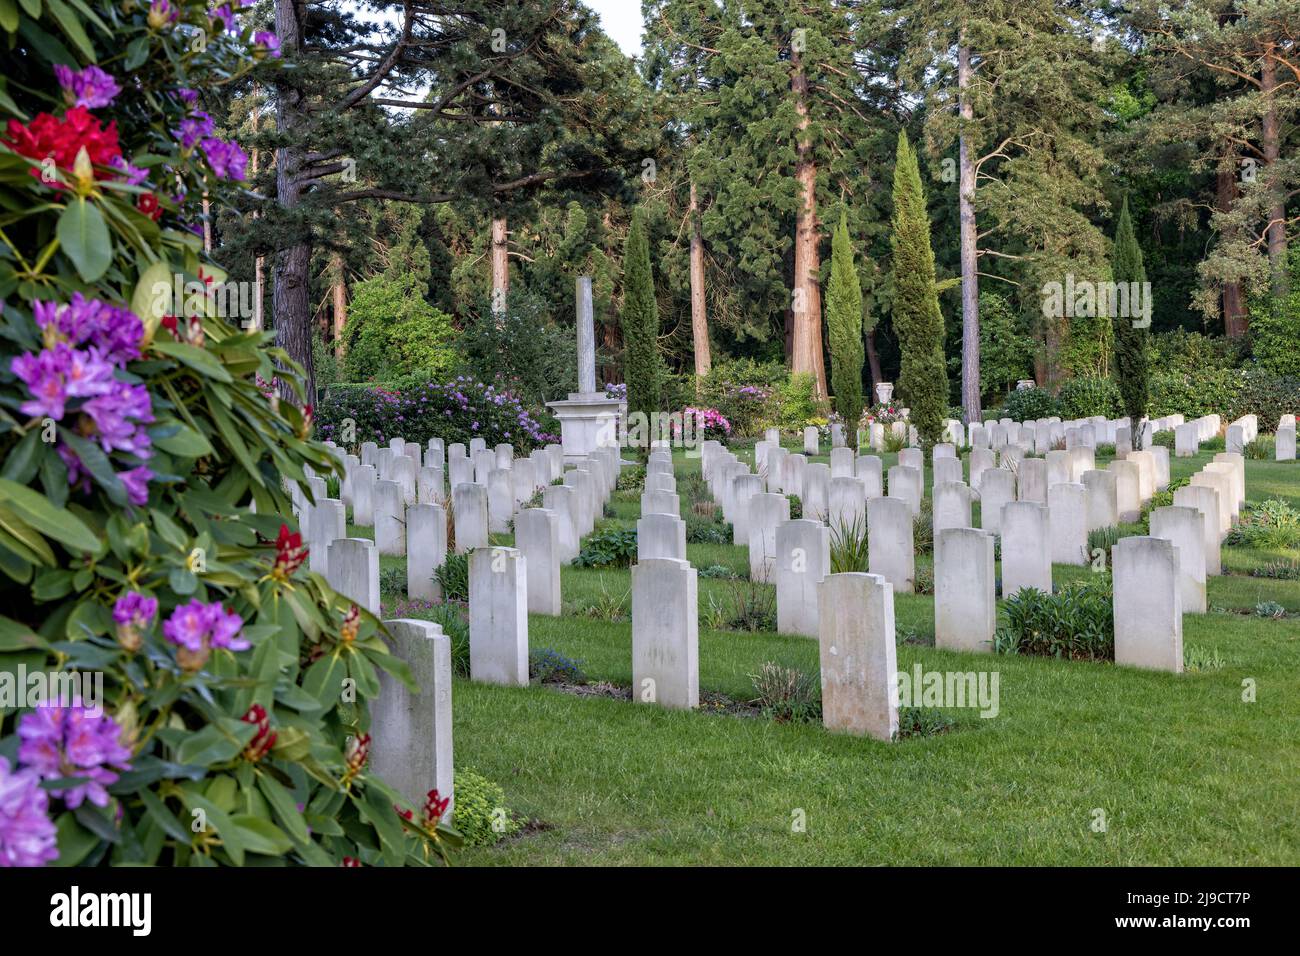 The Italian Plot at Brookwood Military Cemetery with broken column & headstones Stock Photo